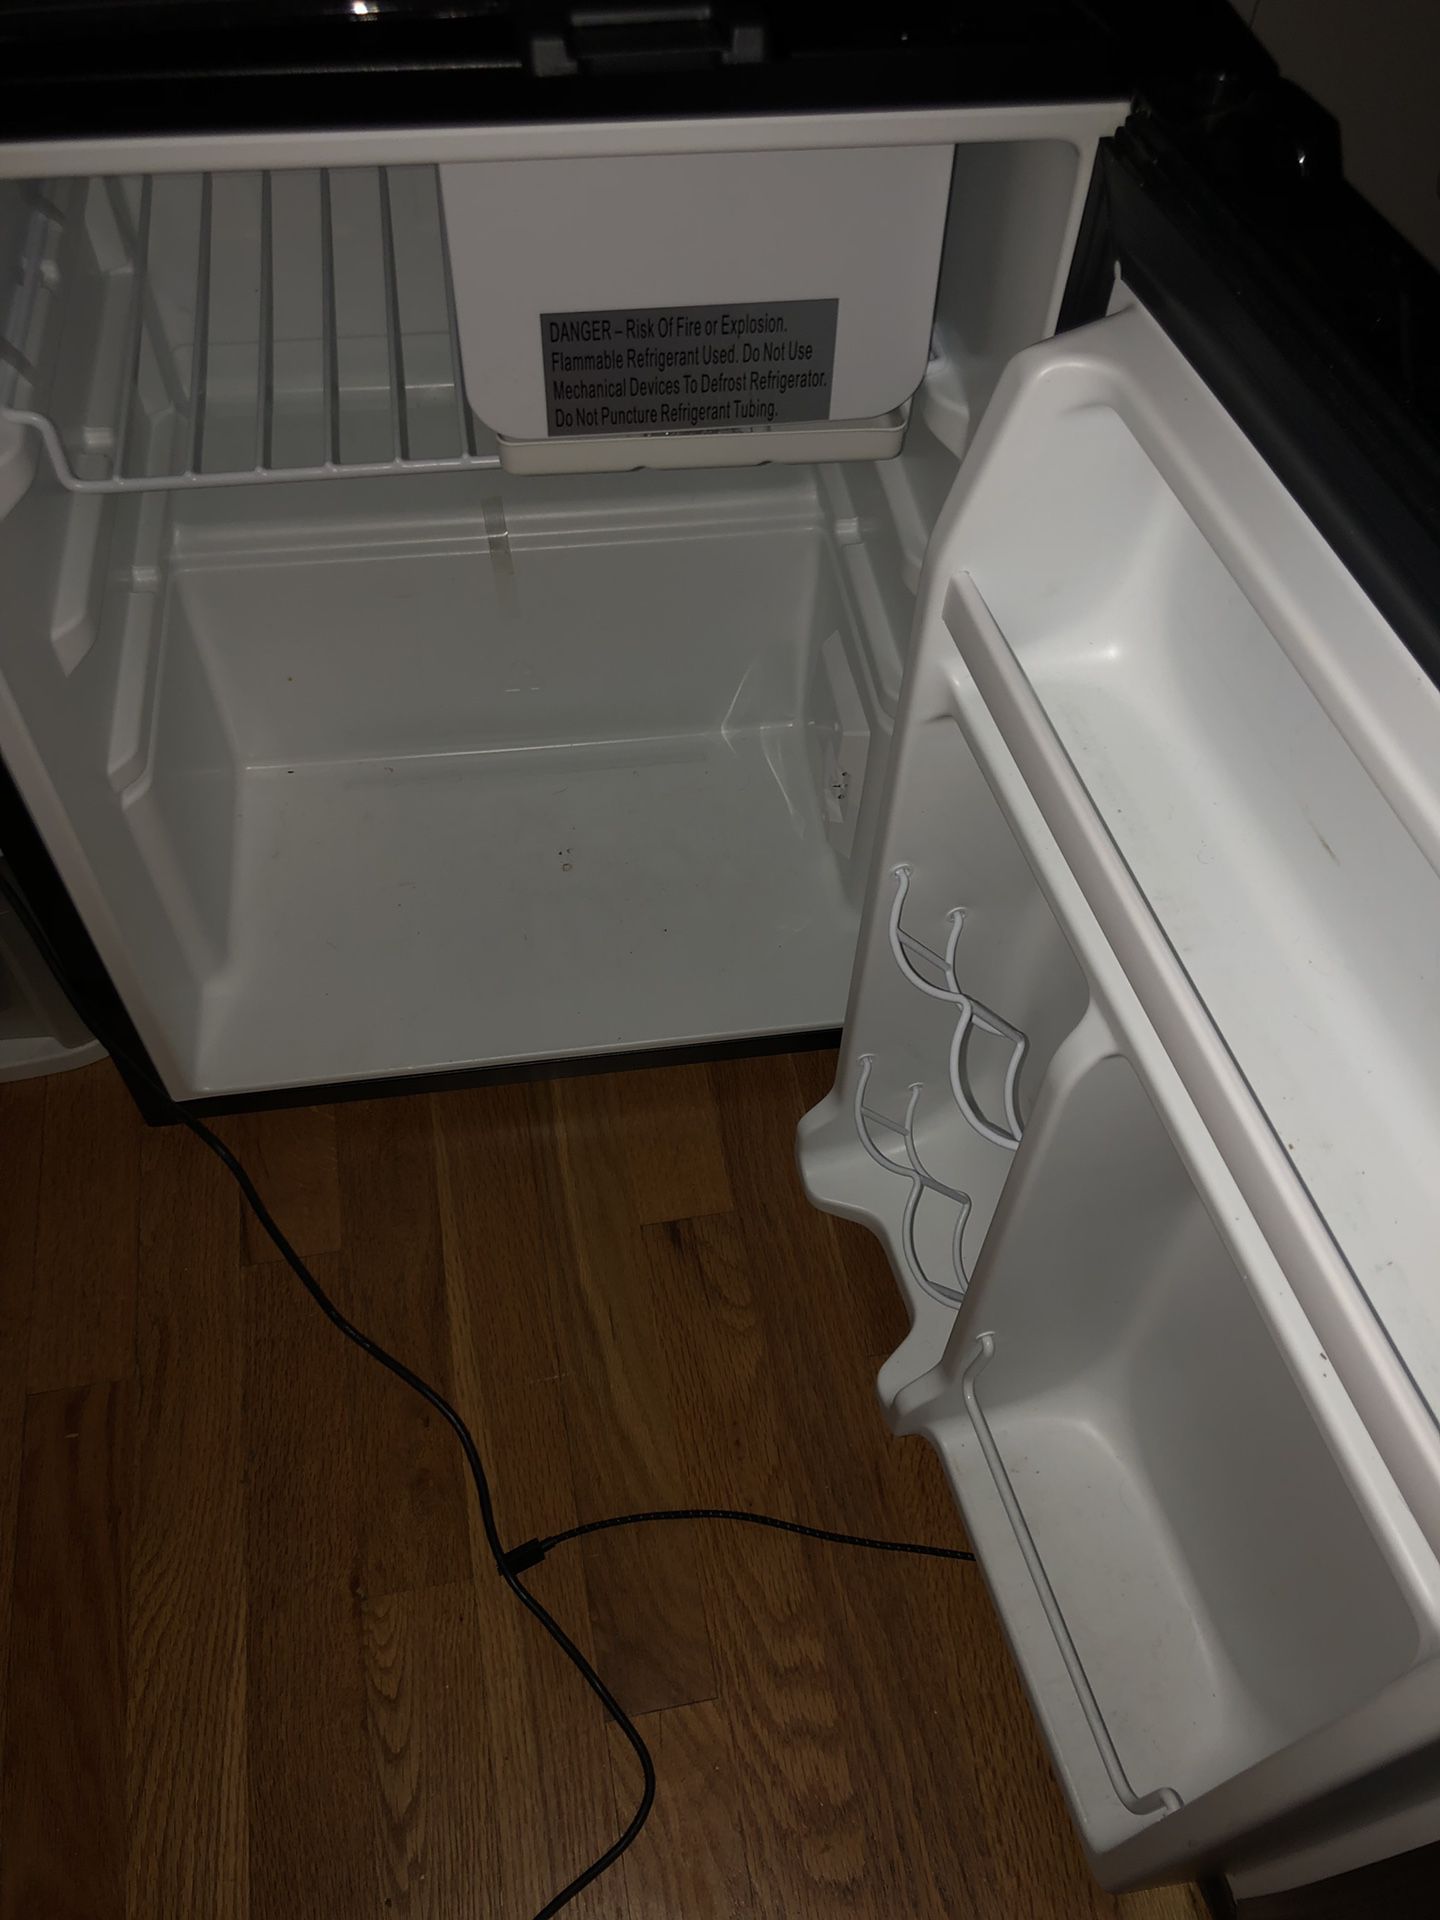 Whirlpool mini fridge